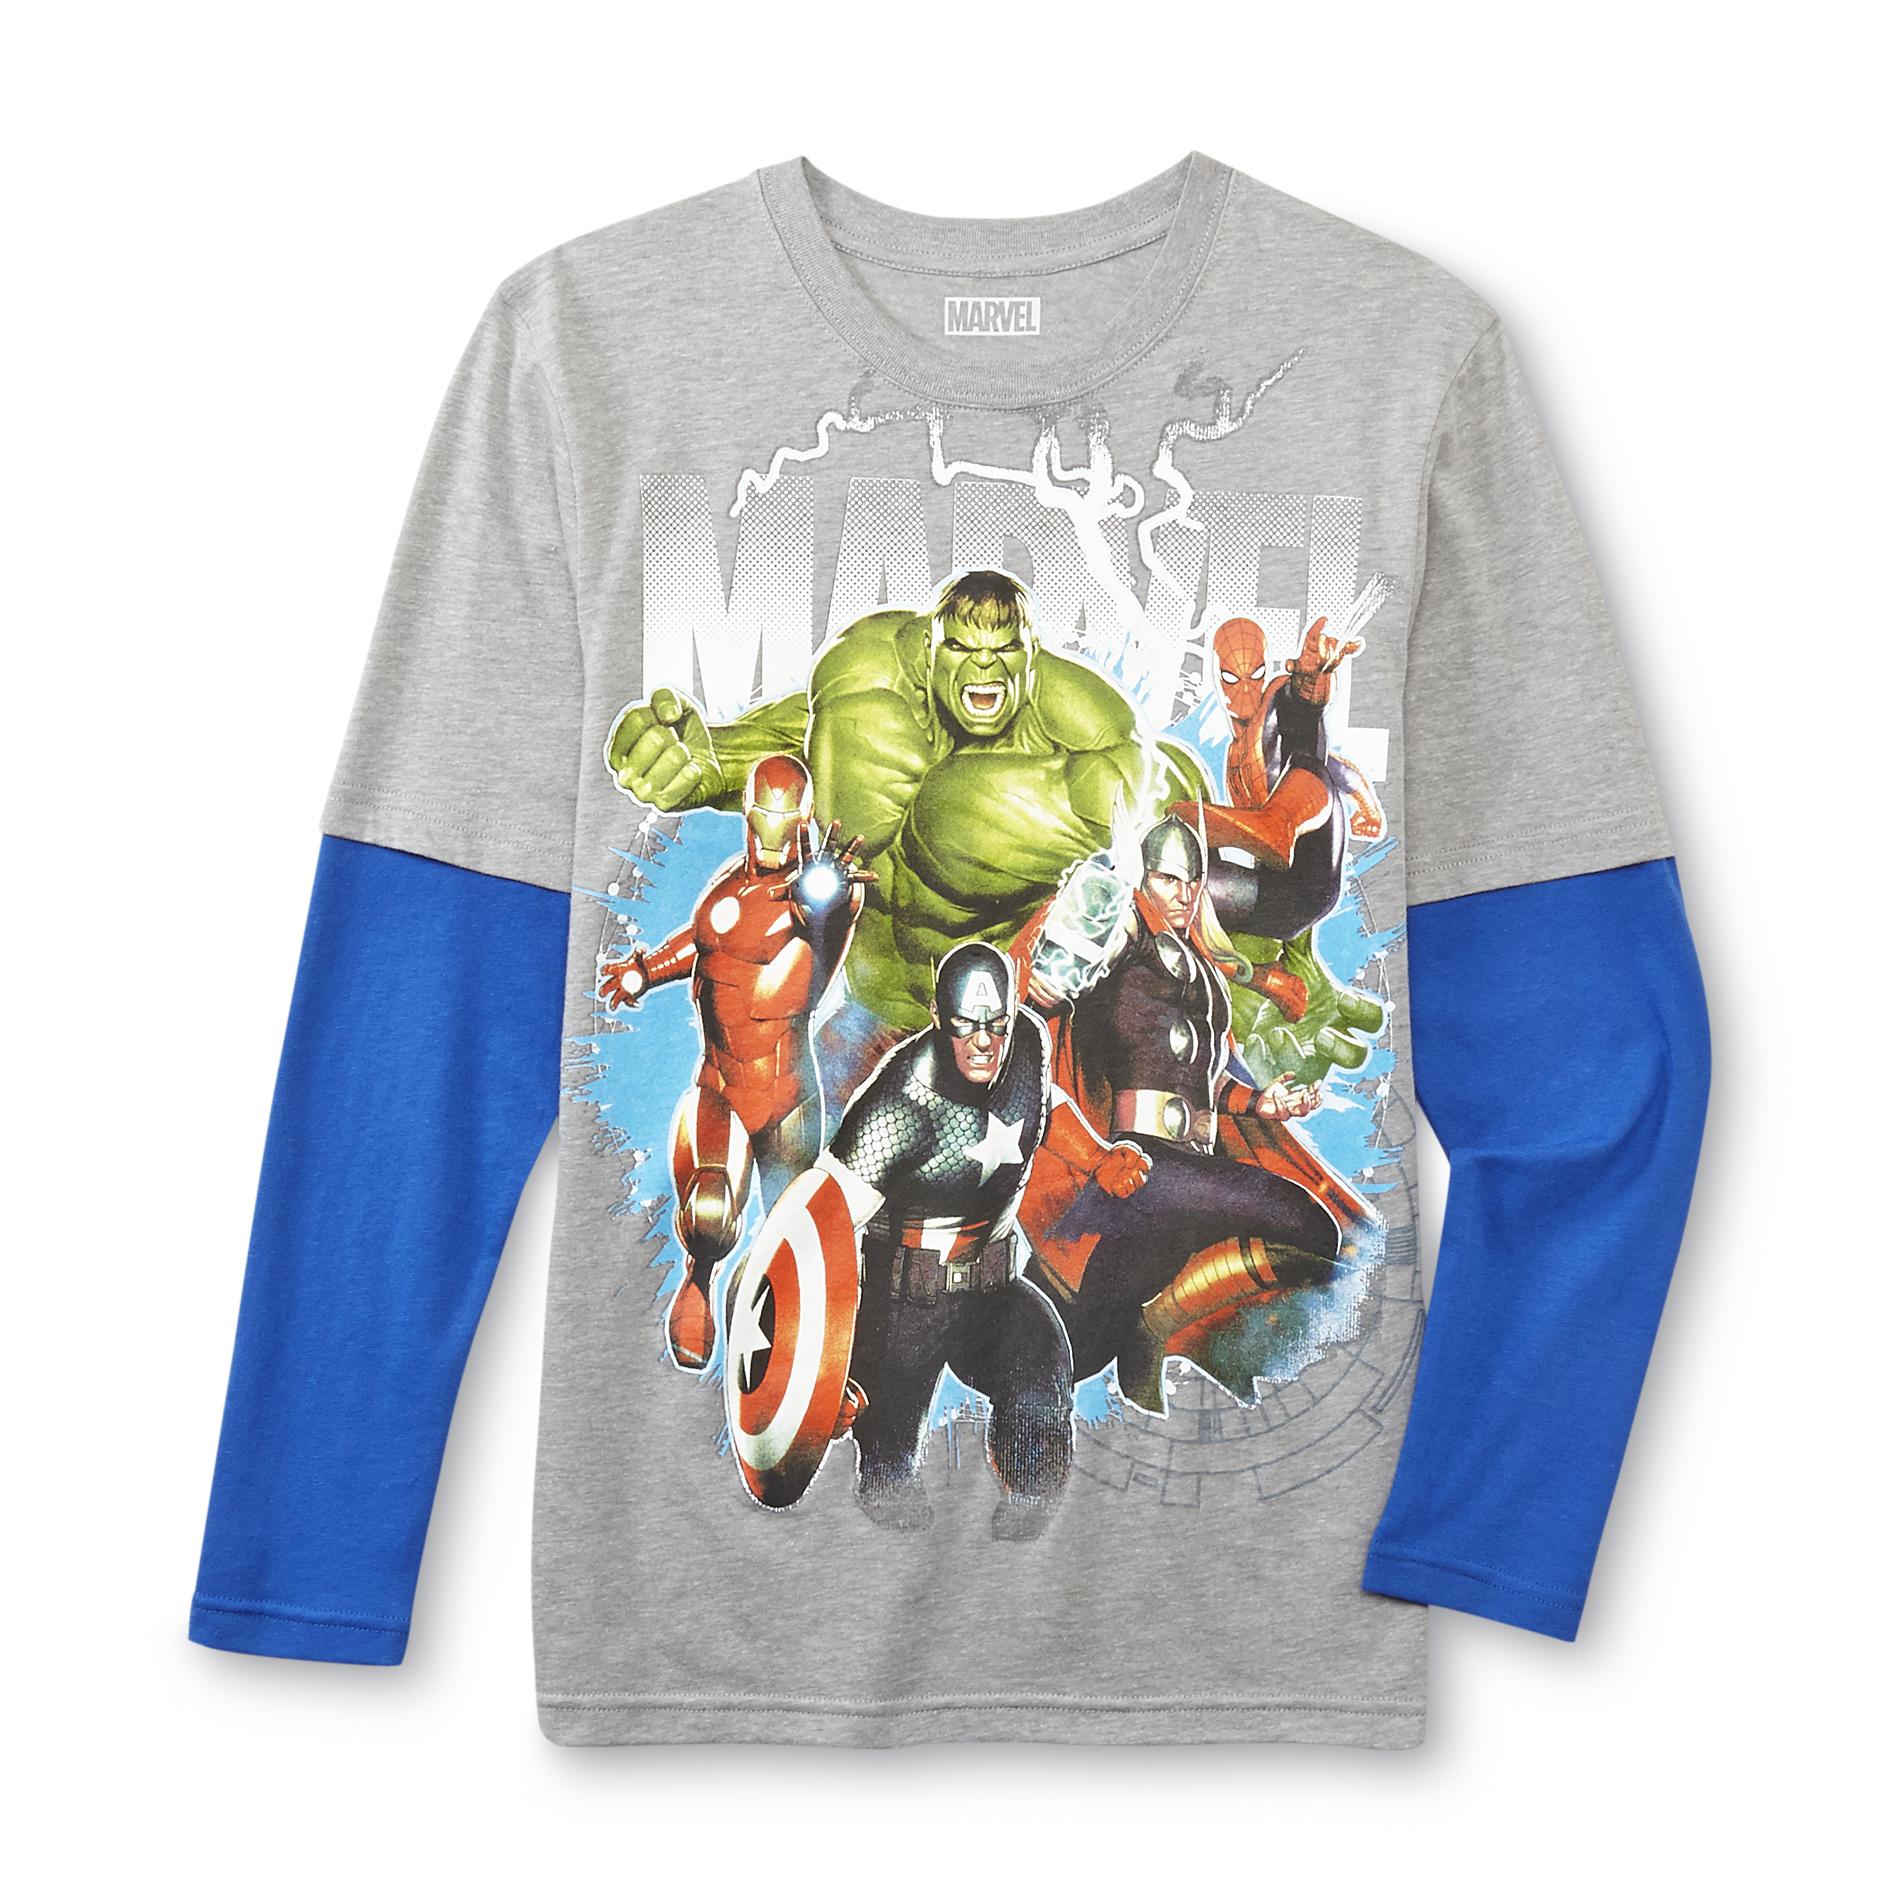 Marvel Universe Boy's Graphic Shirt - Superheroes